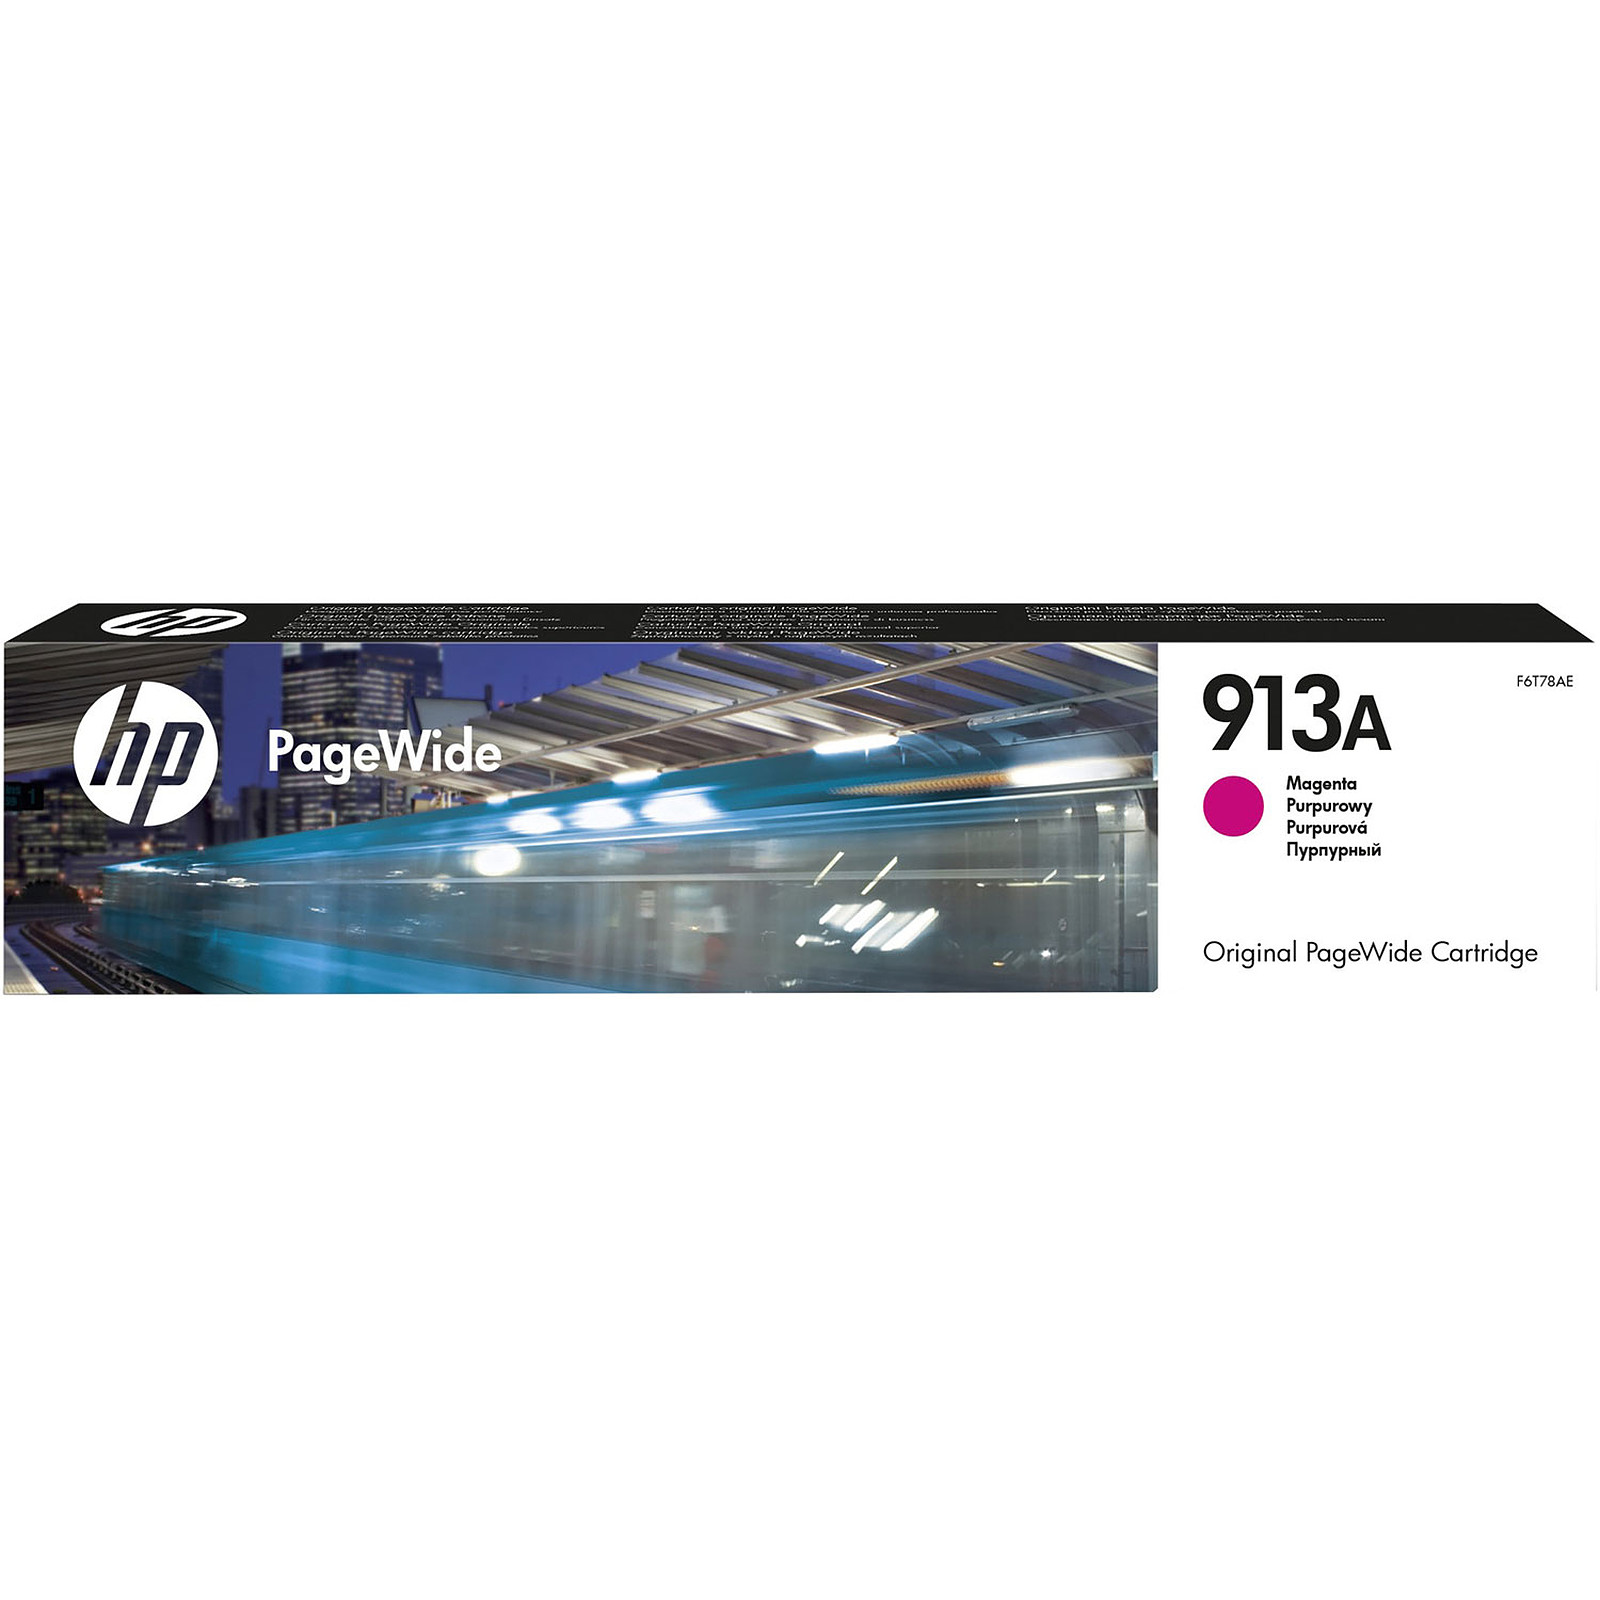 HP PageWide 913A (F6T78AE) - Magenta - Cartouche imprimante HP